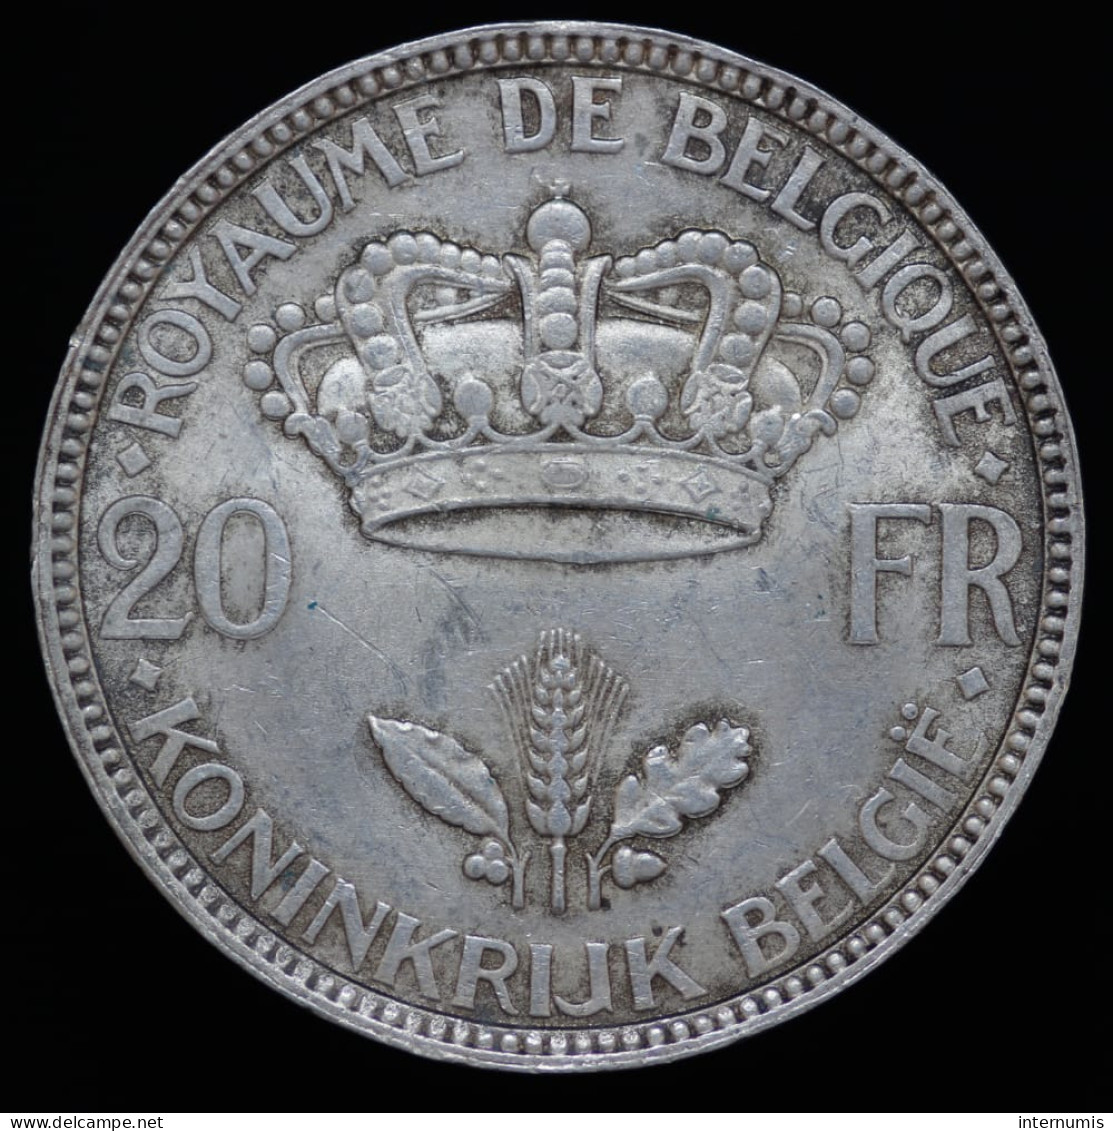 Belgique / Belgium, Léopold III, 20 Francs, 1935, Argent (Silver), SPL (UNC), KM#105 - 20 Frank